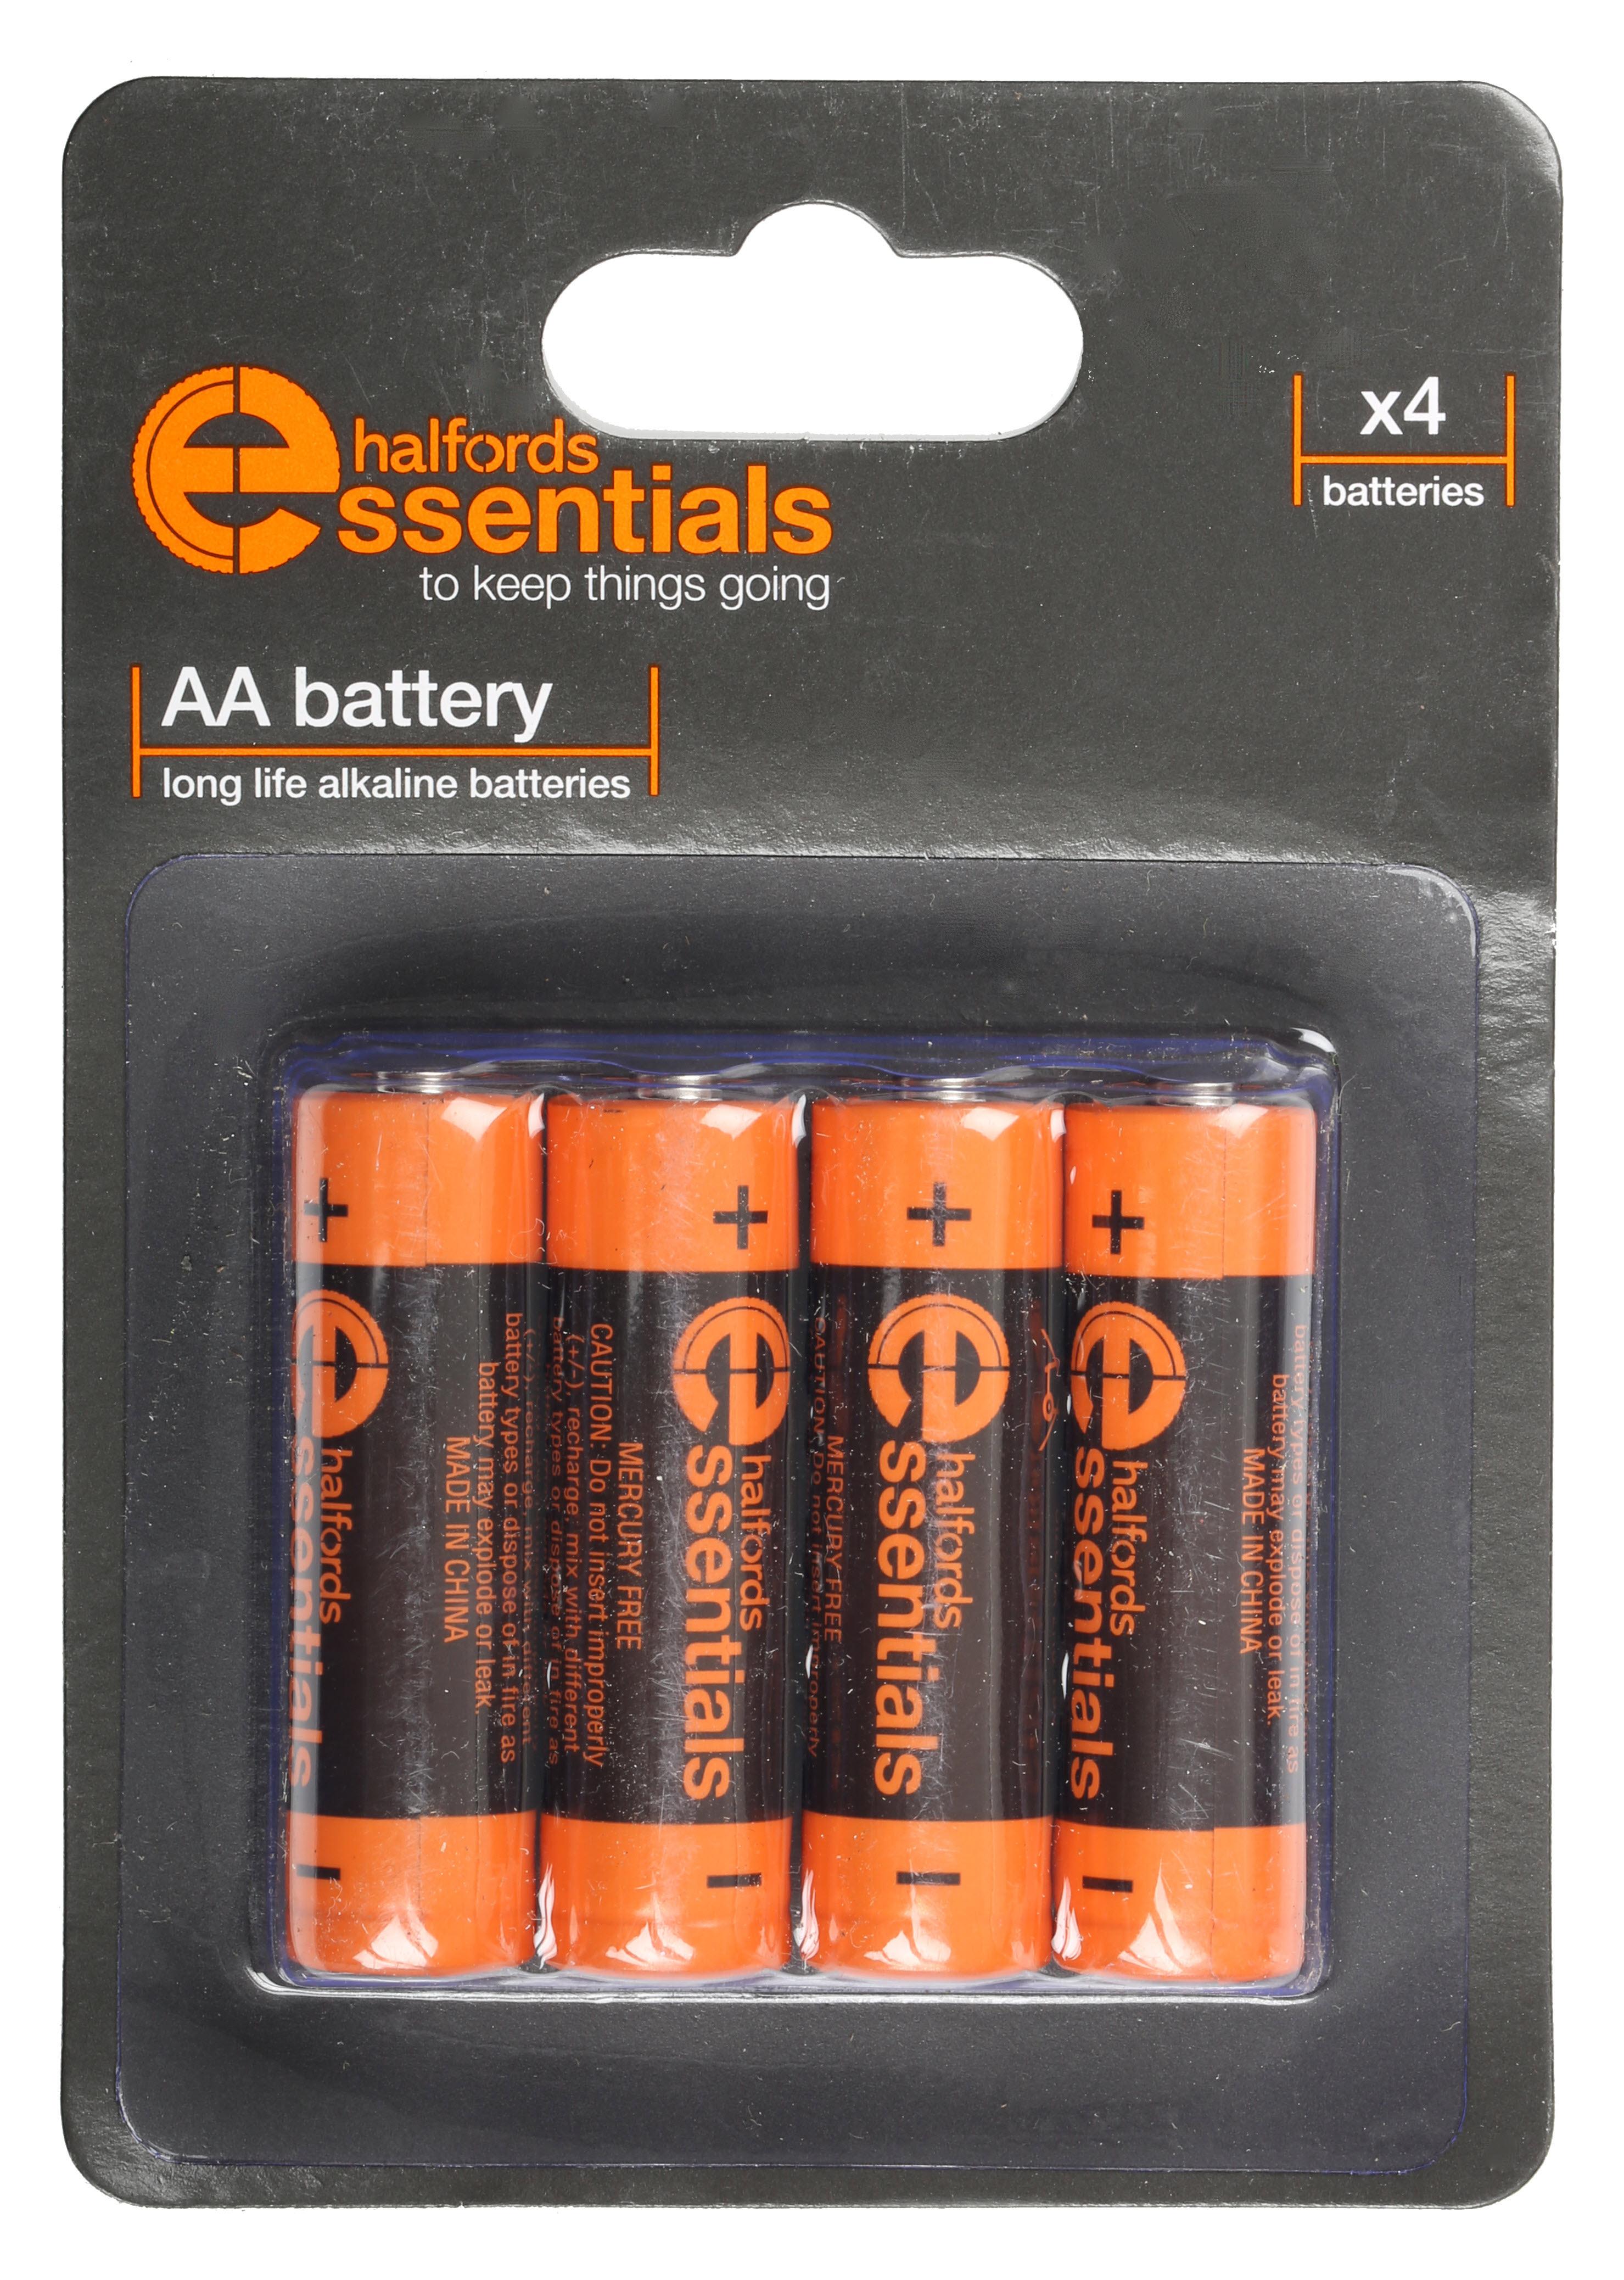 Halfords Essential Batteries Aa X4